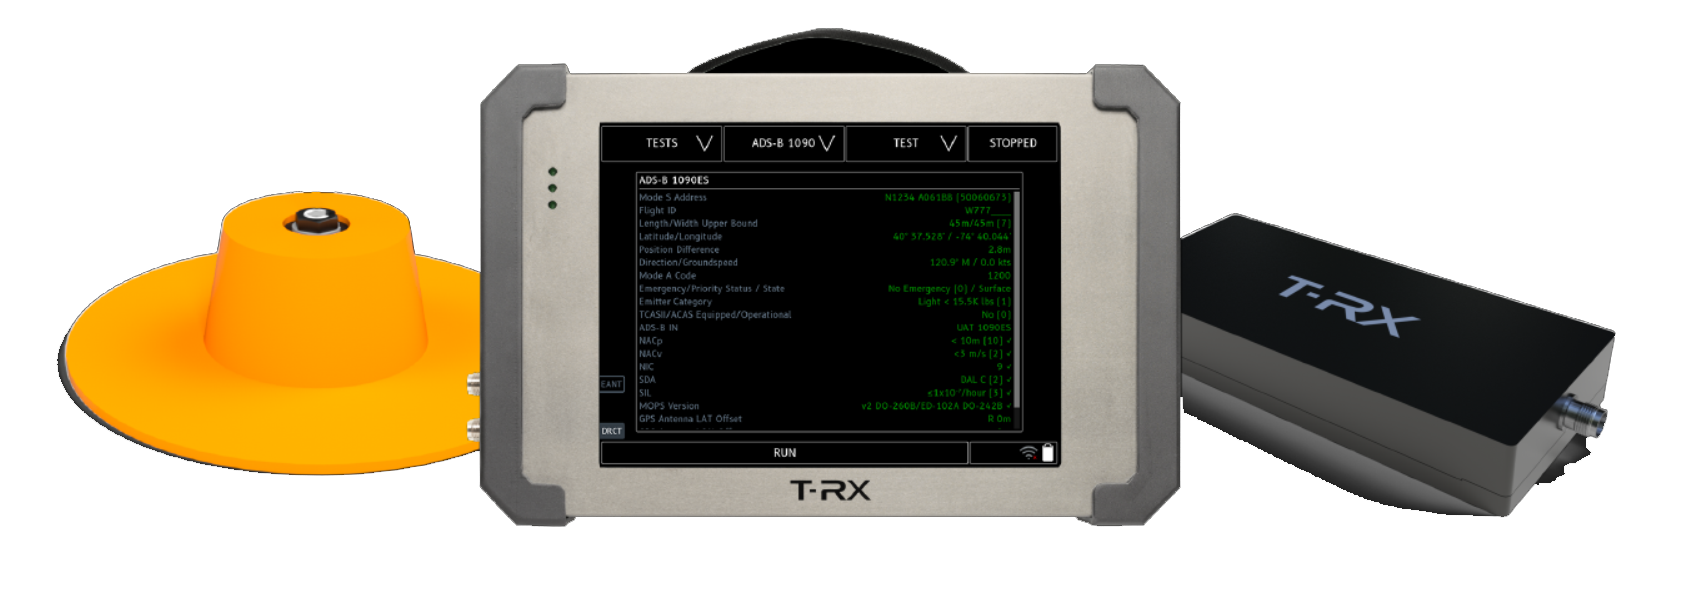 CCX T-RX RP+ GPS Radio & Pulse NAV/COMM Transponder Multifunction Test Set